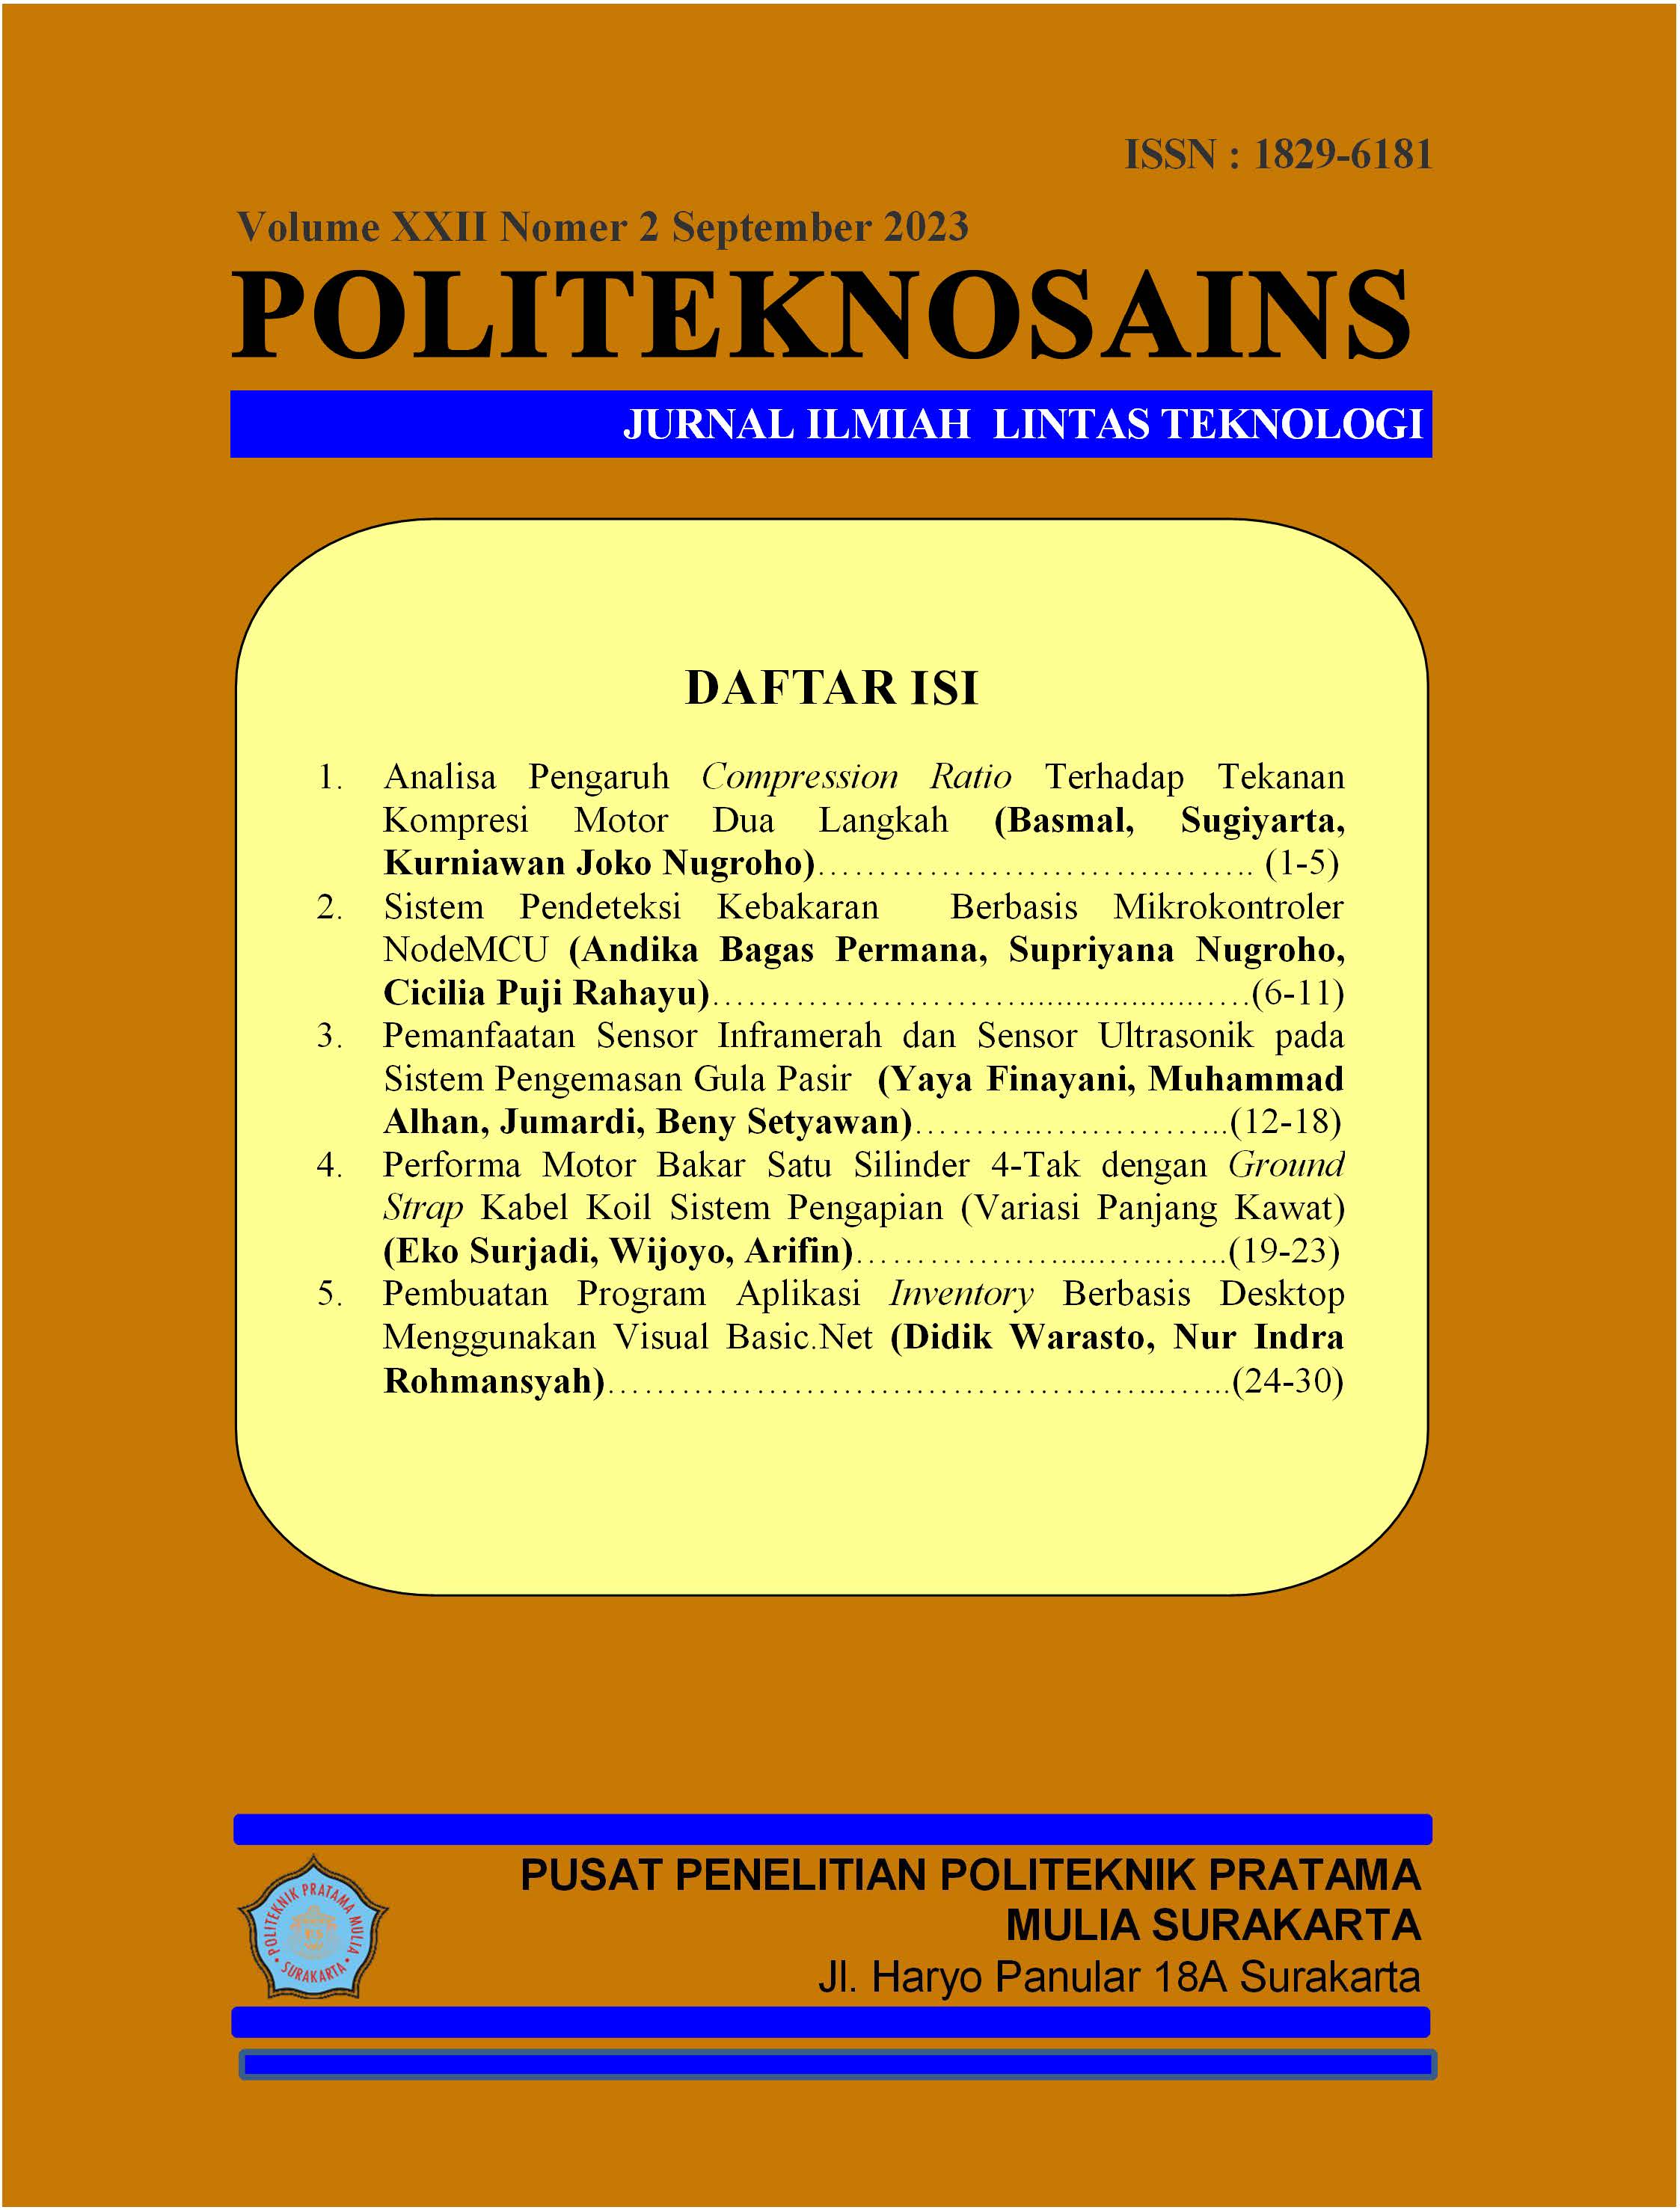 					Lihat Vol 22 No 2 (2023): Jurnal Politeknosains Volume 22 Nomor 2 - September 2023
				